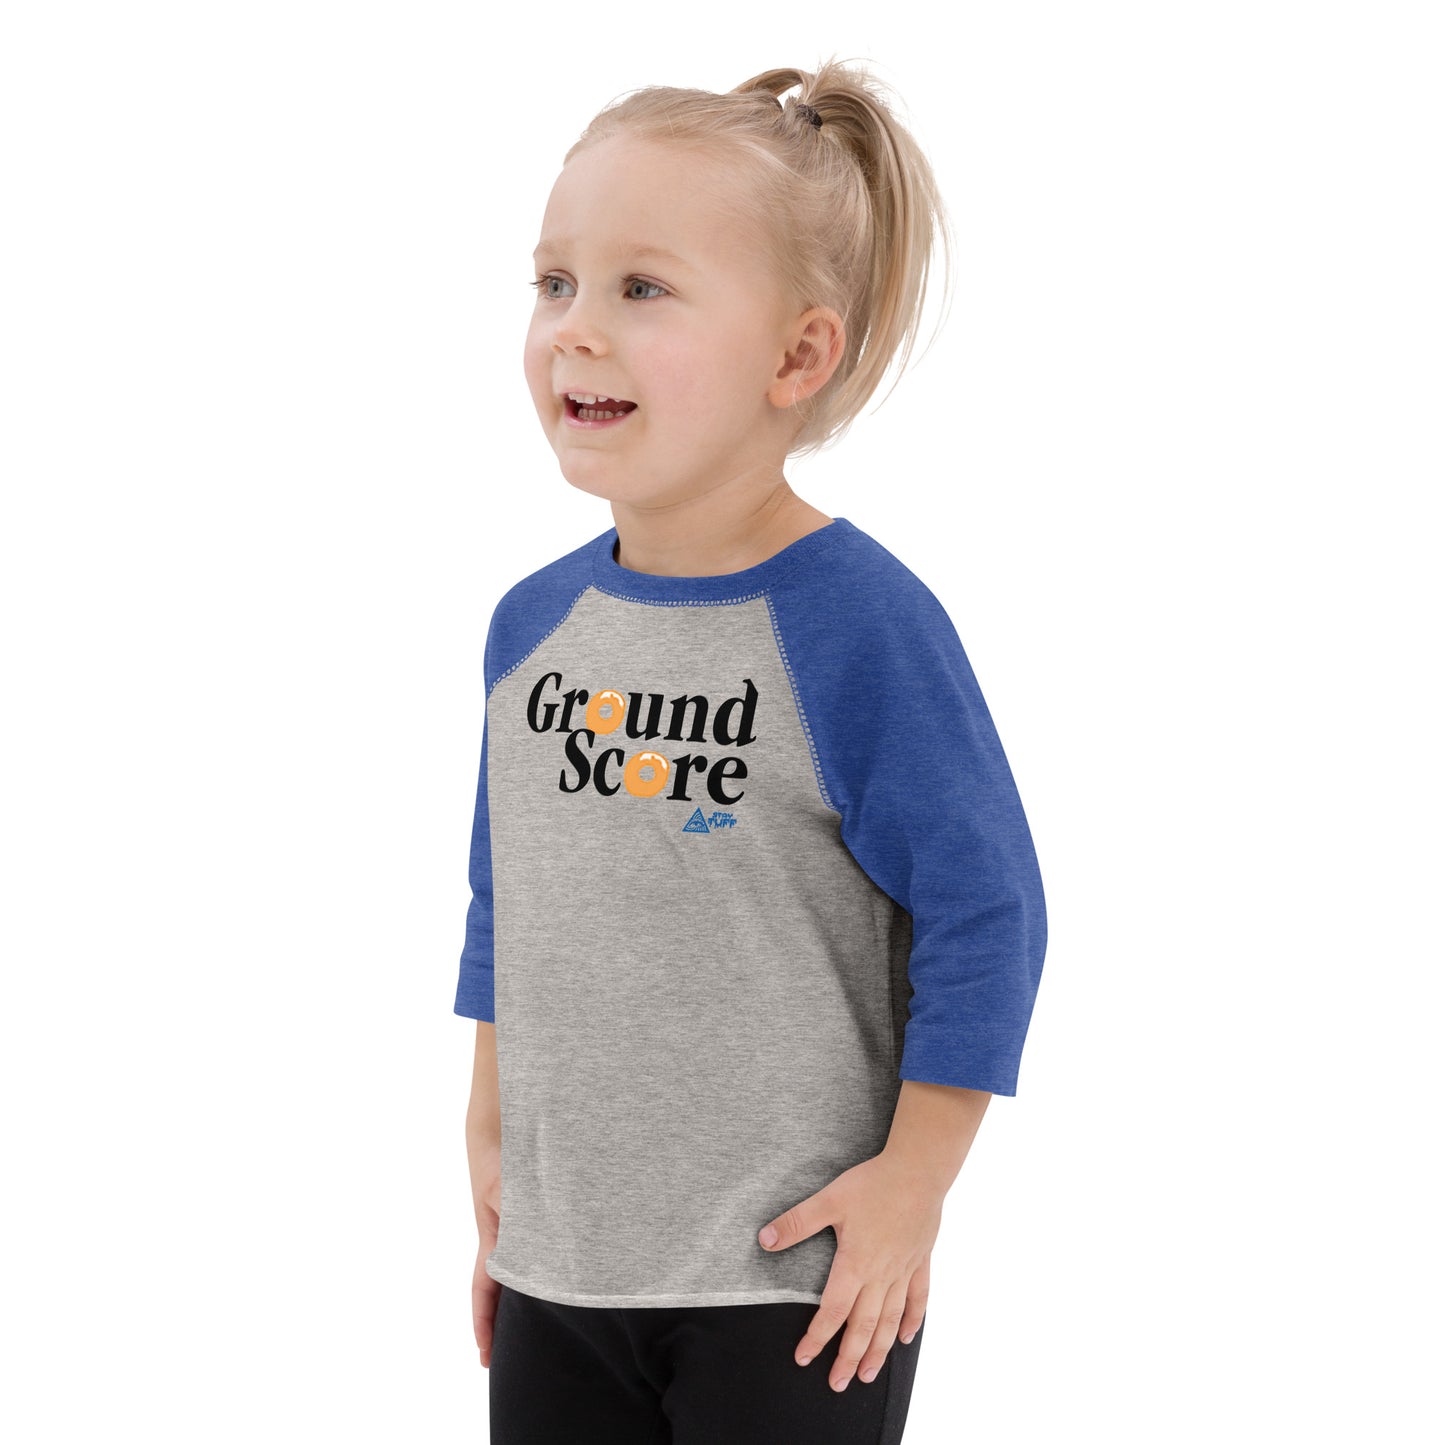 GROUND SCORE (Toddler Baseball Shirt)